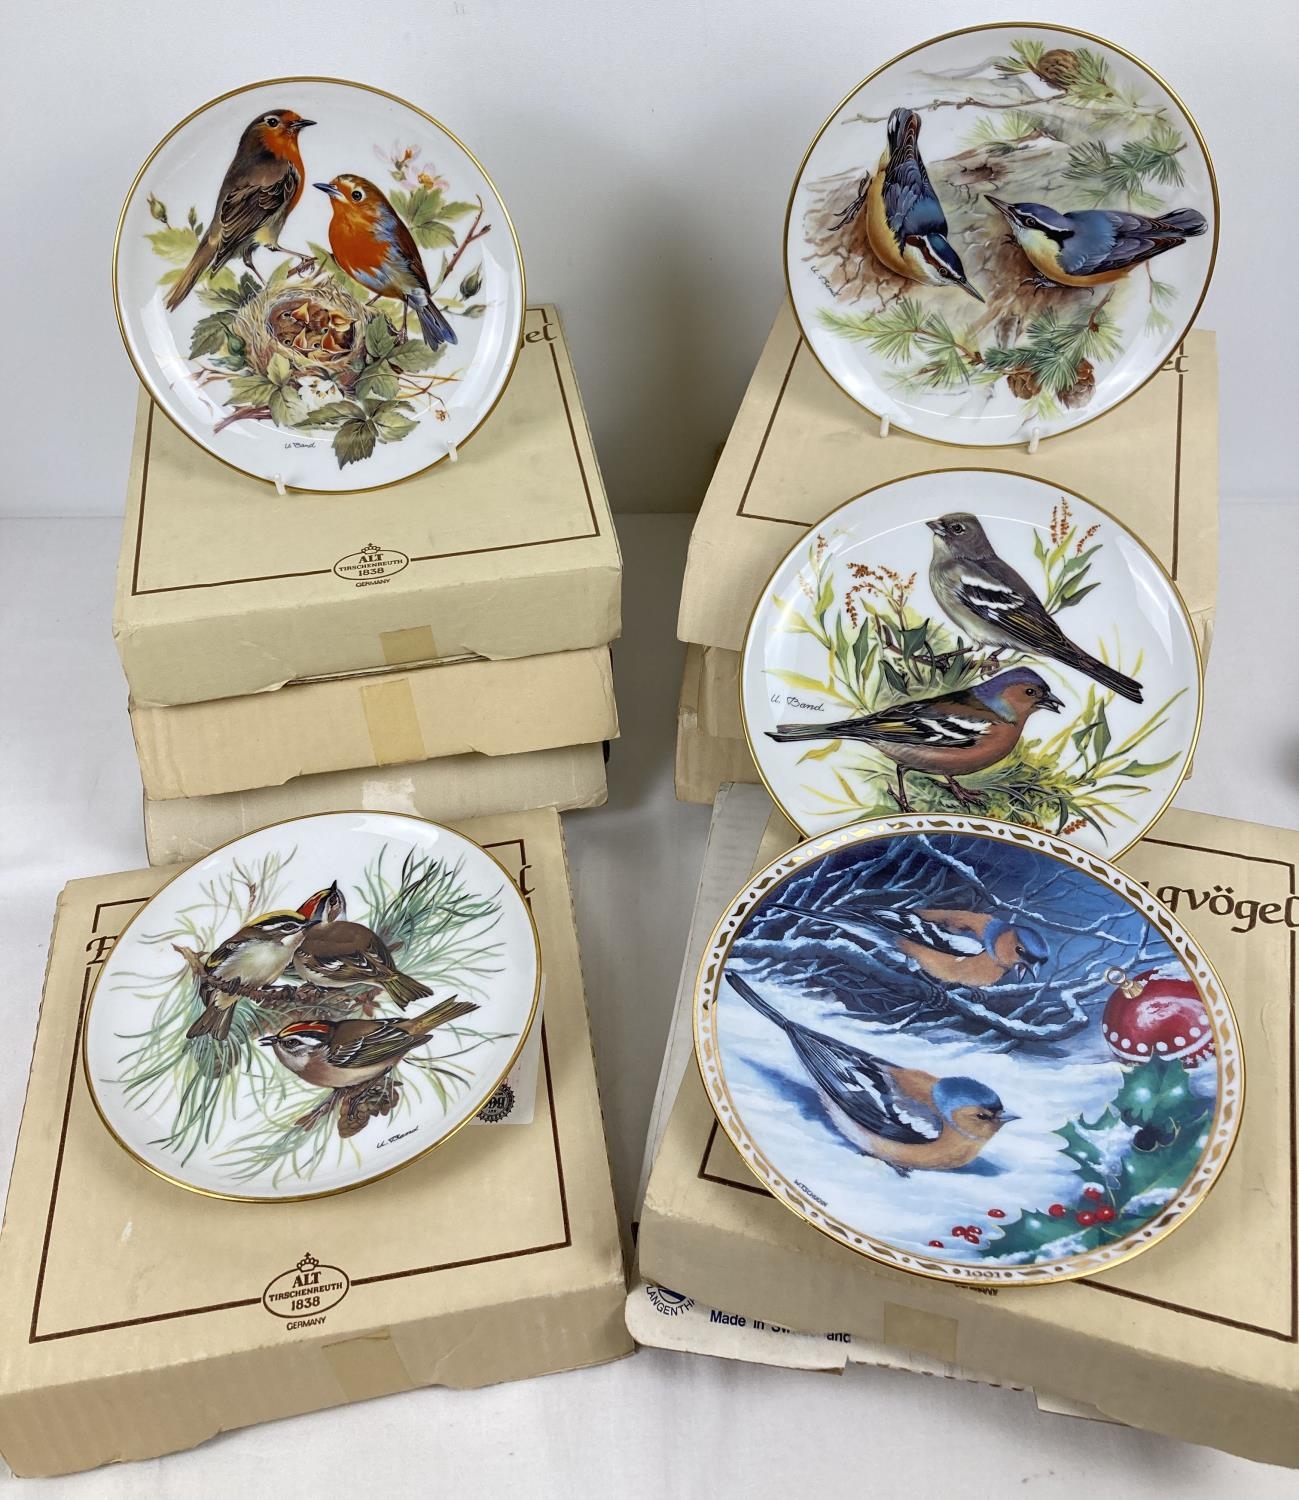 A collection of 8 Bradford Exchange Bradex Alt Tirschenreuth WWF bird plates. All numbered and in